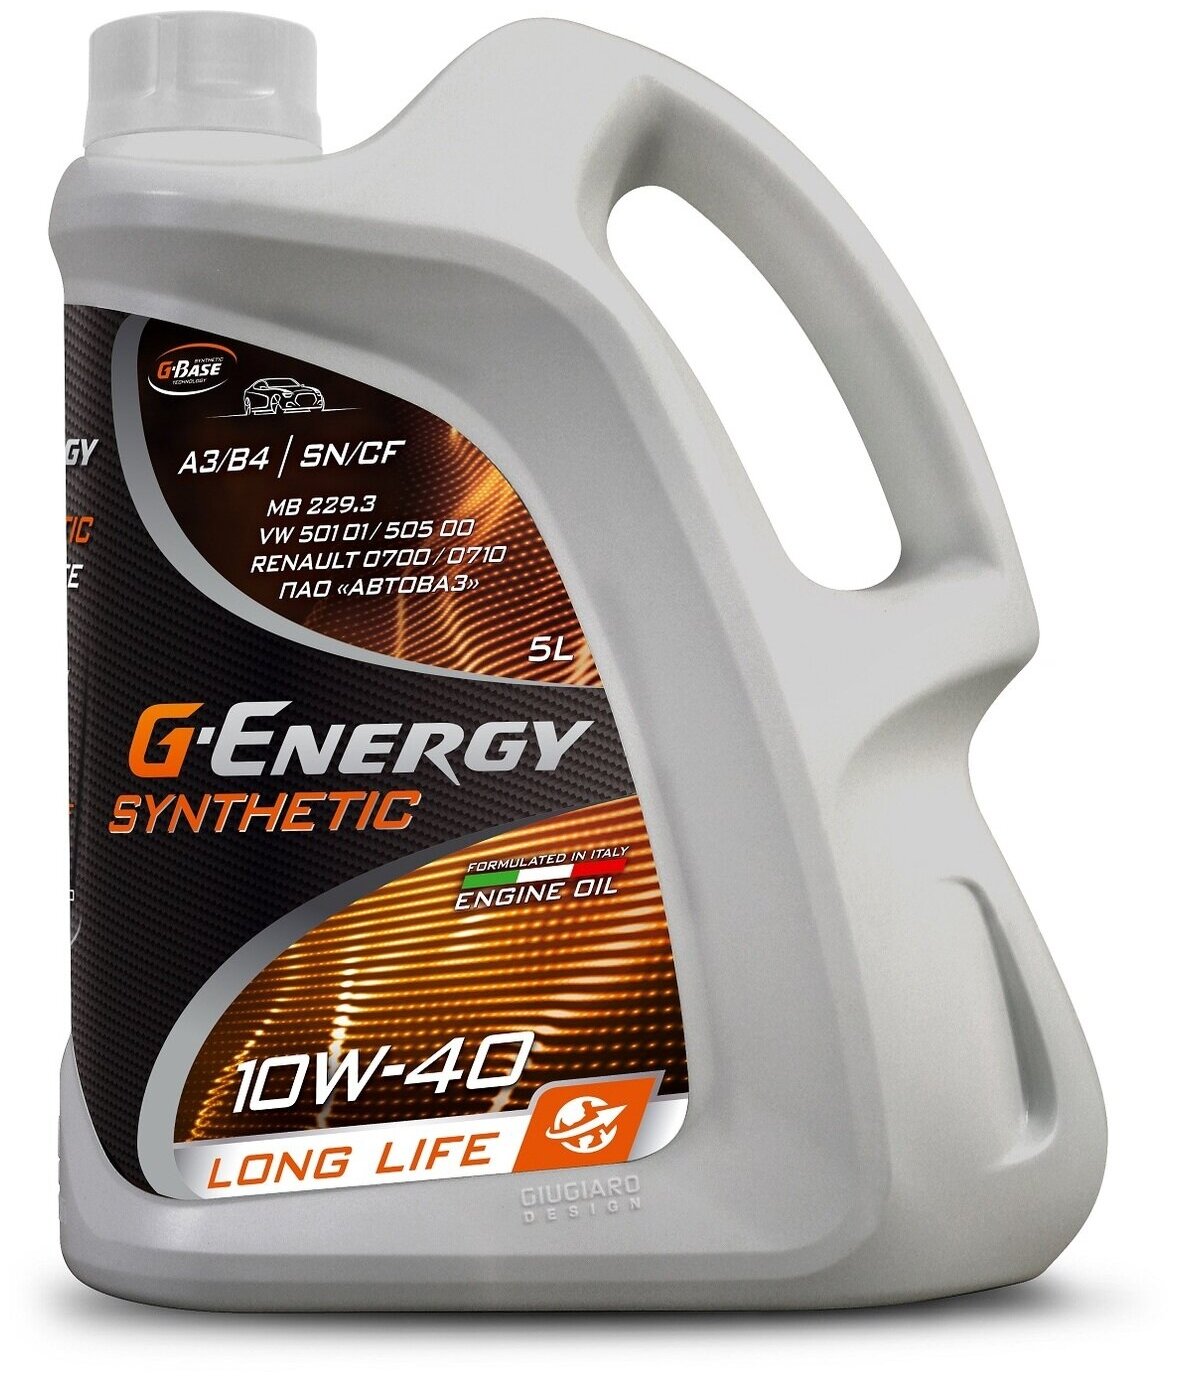    G-Energy Synthetic Long Life 10W-40, API SN/CF, ACEA A3/B4, 5